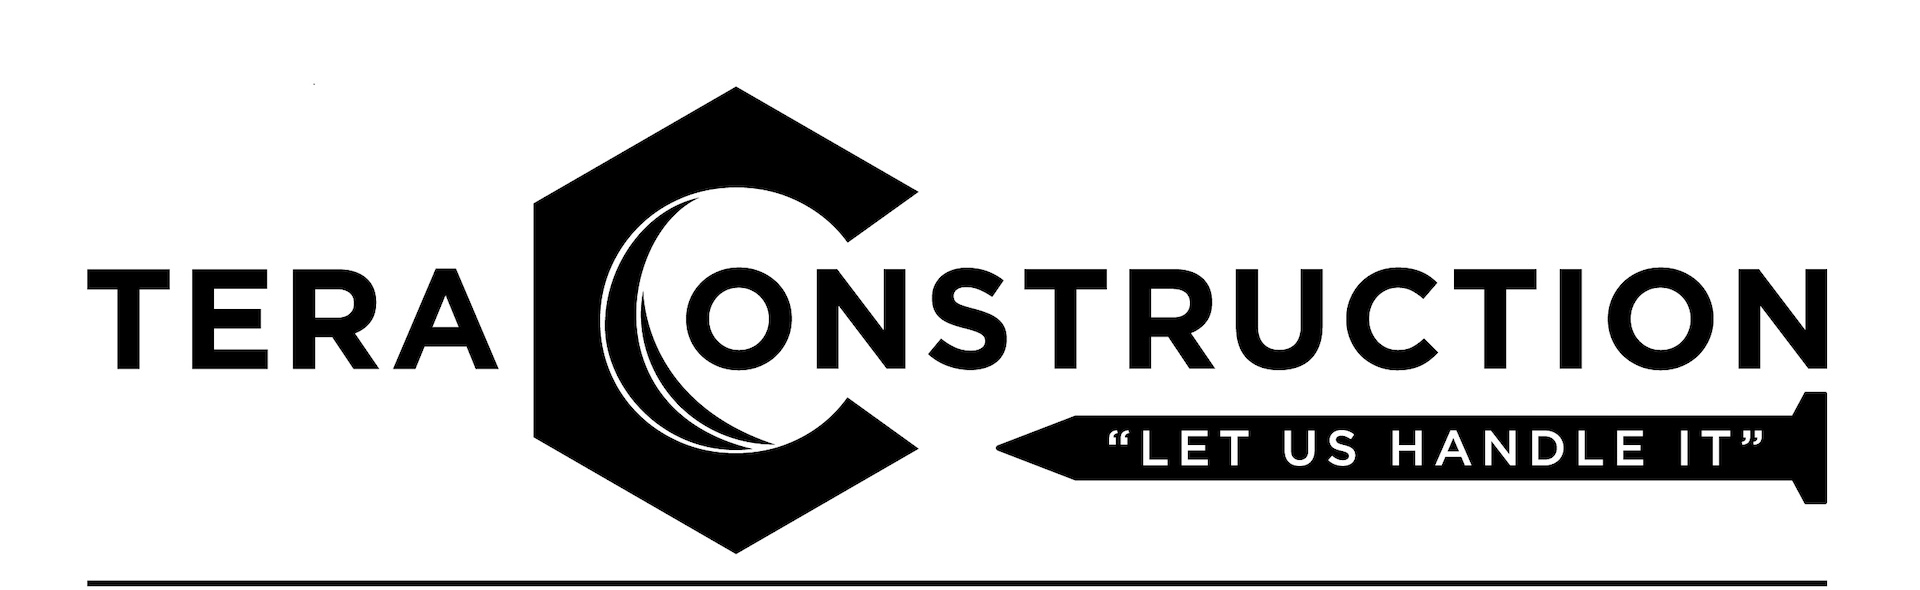 Tera Construction - Let us handle it